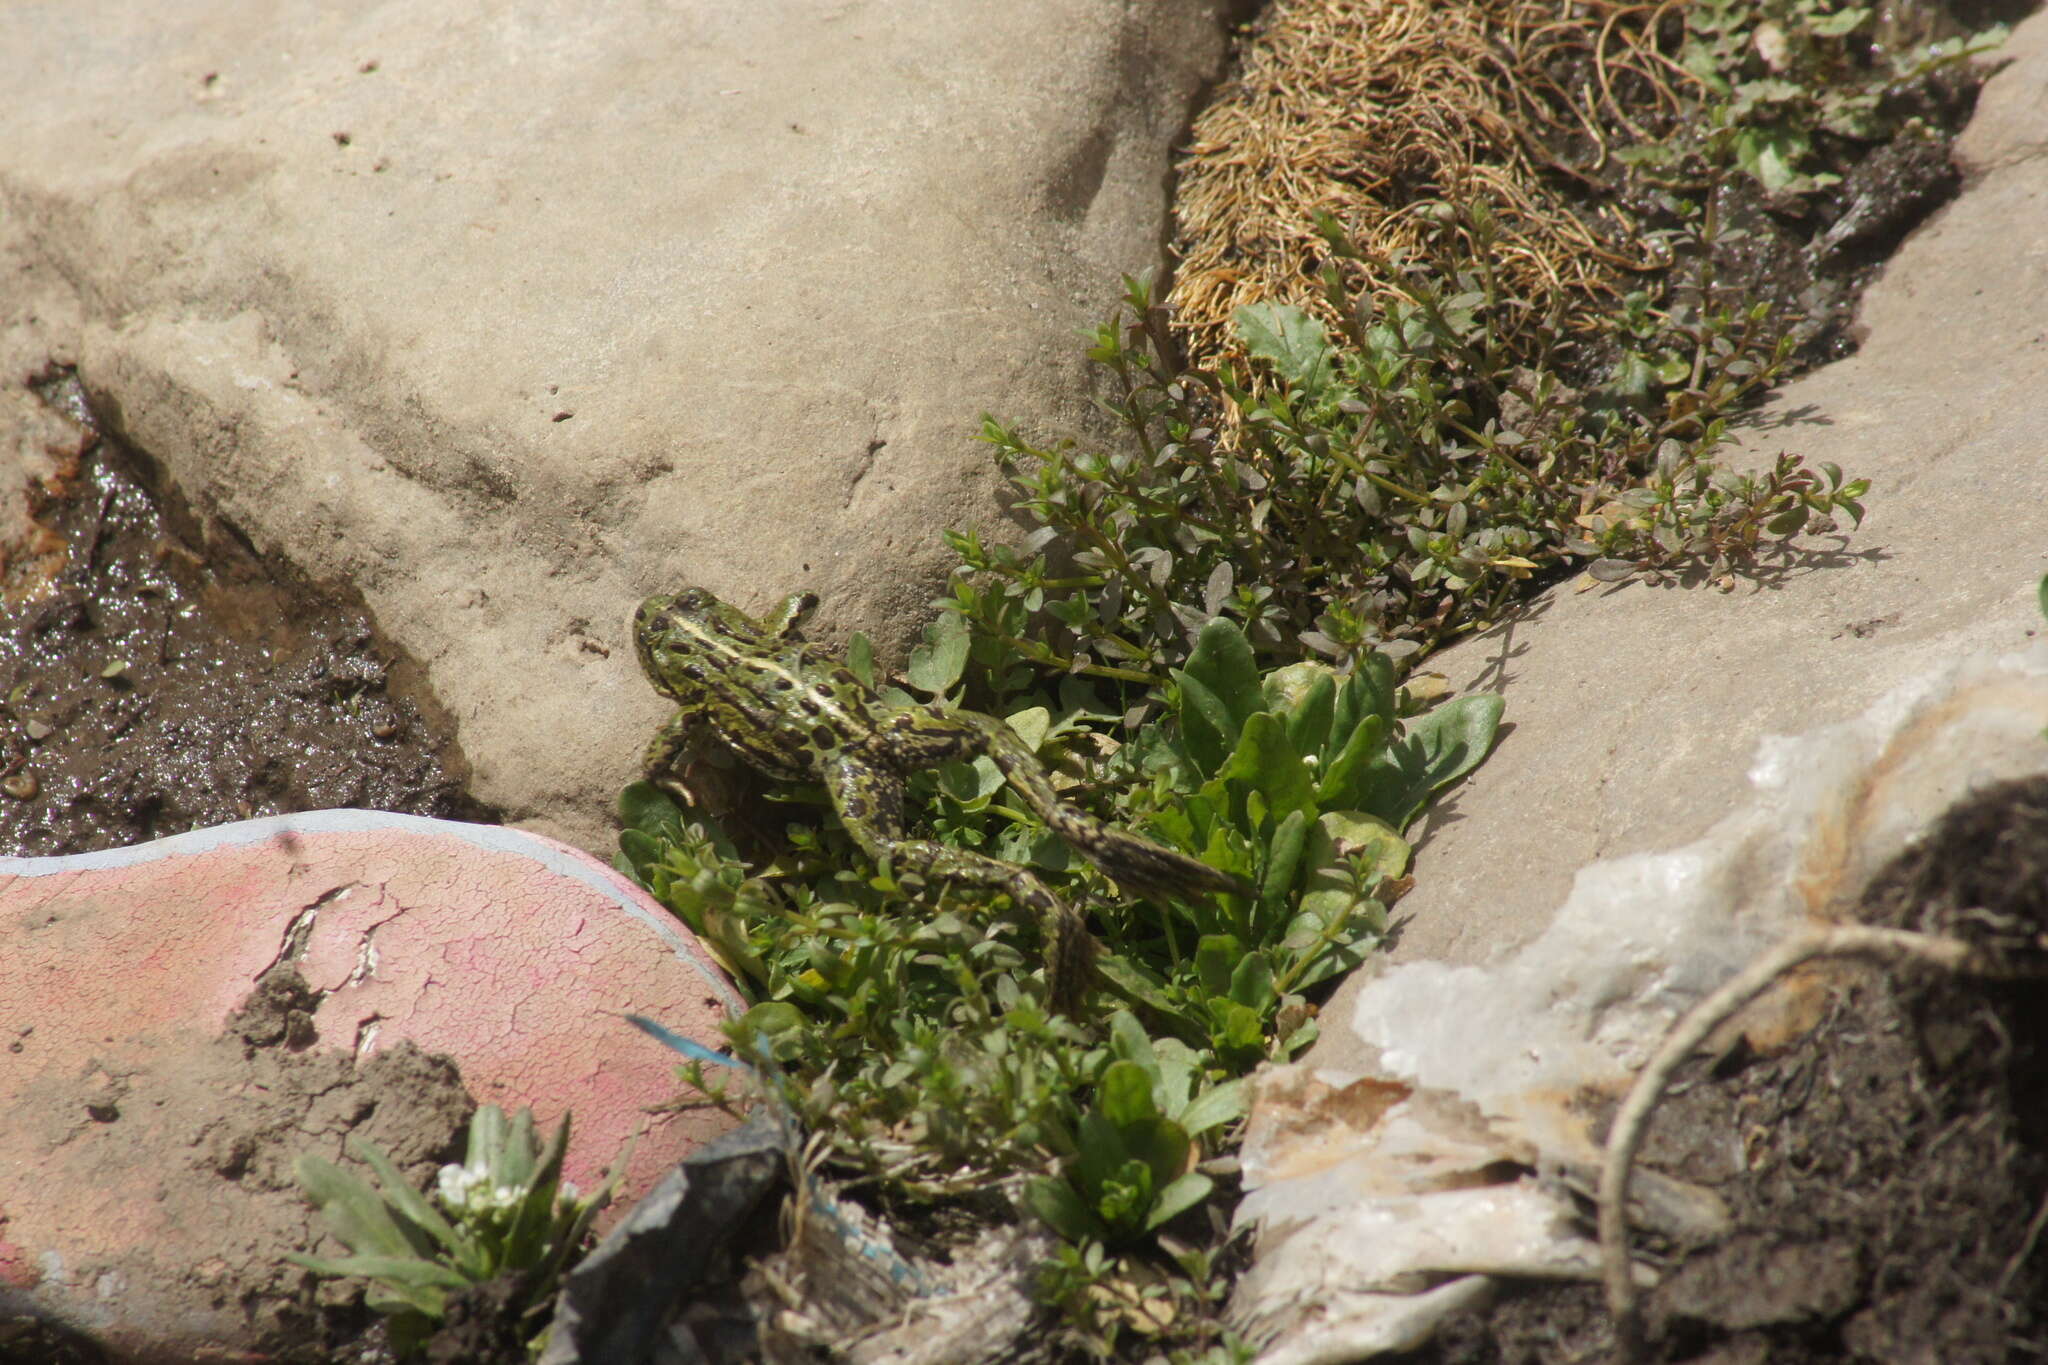 Image of Plateau Frog